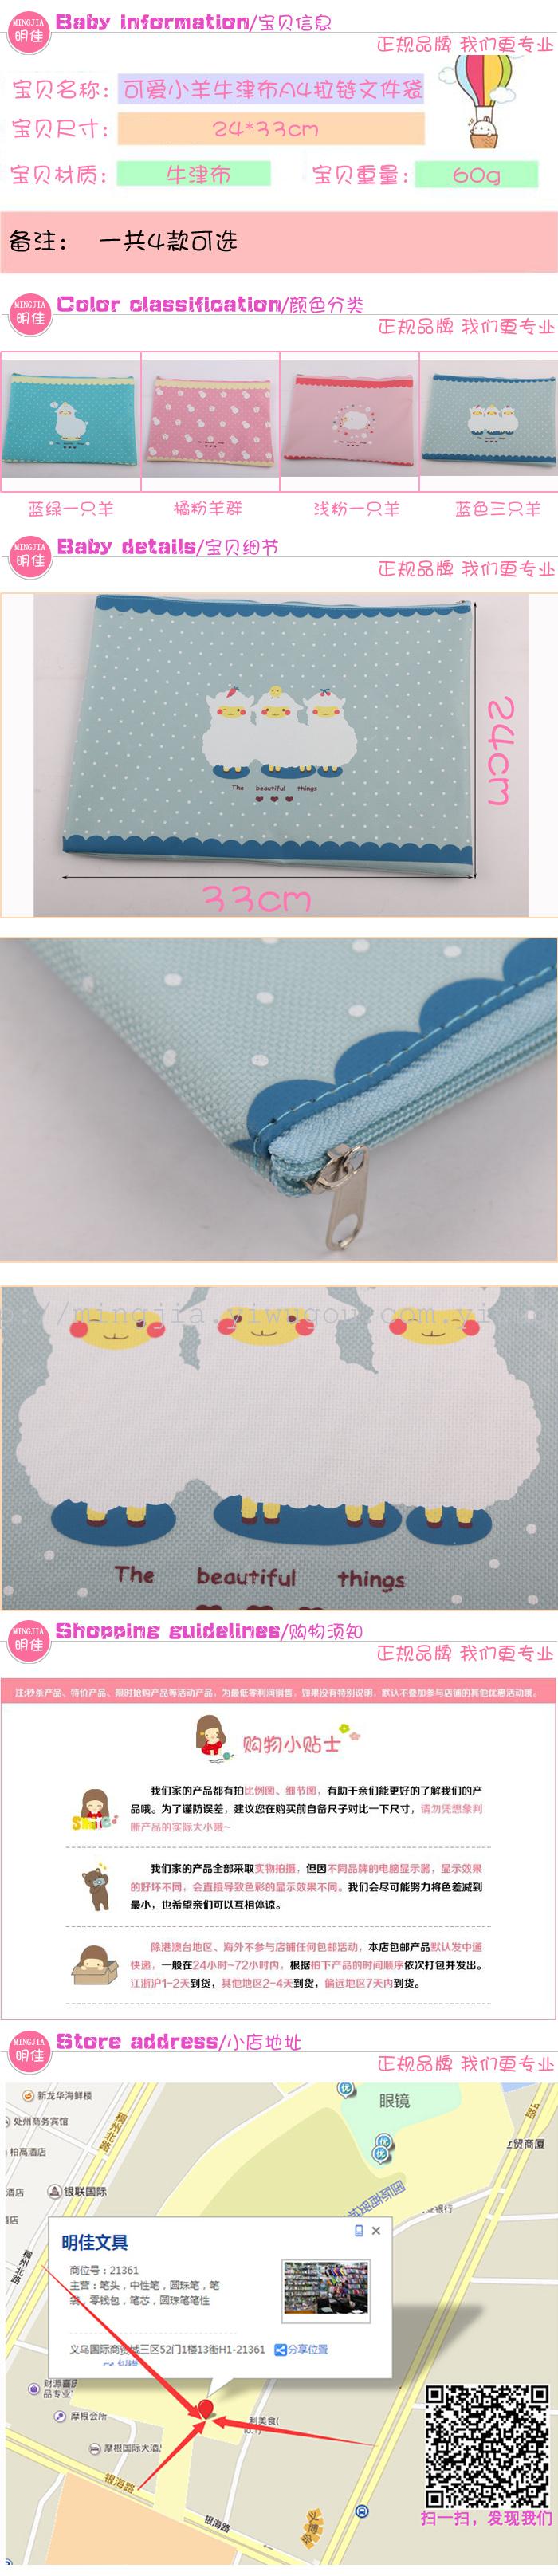 Korea stationery cute lamb zipper kits new products canvas bag